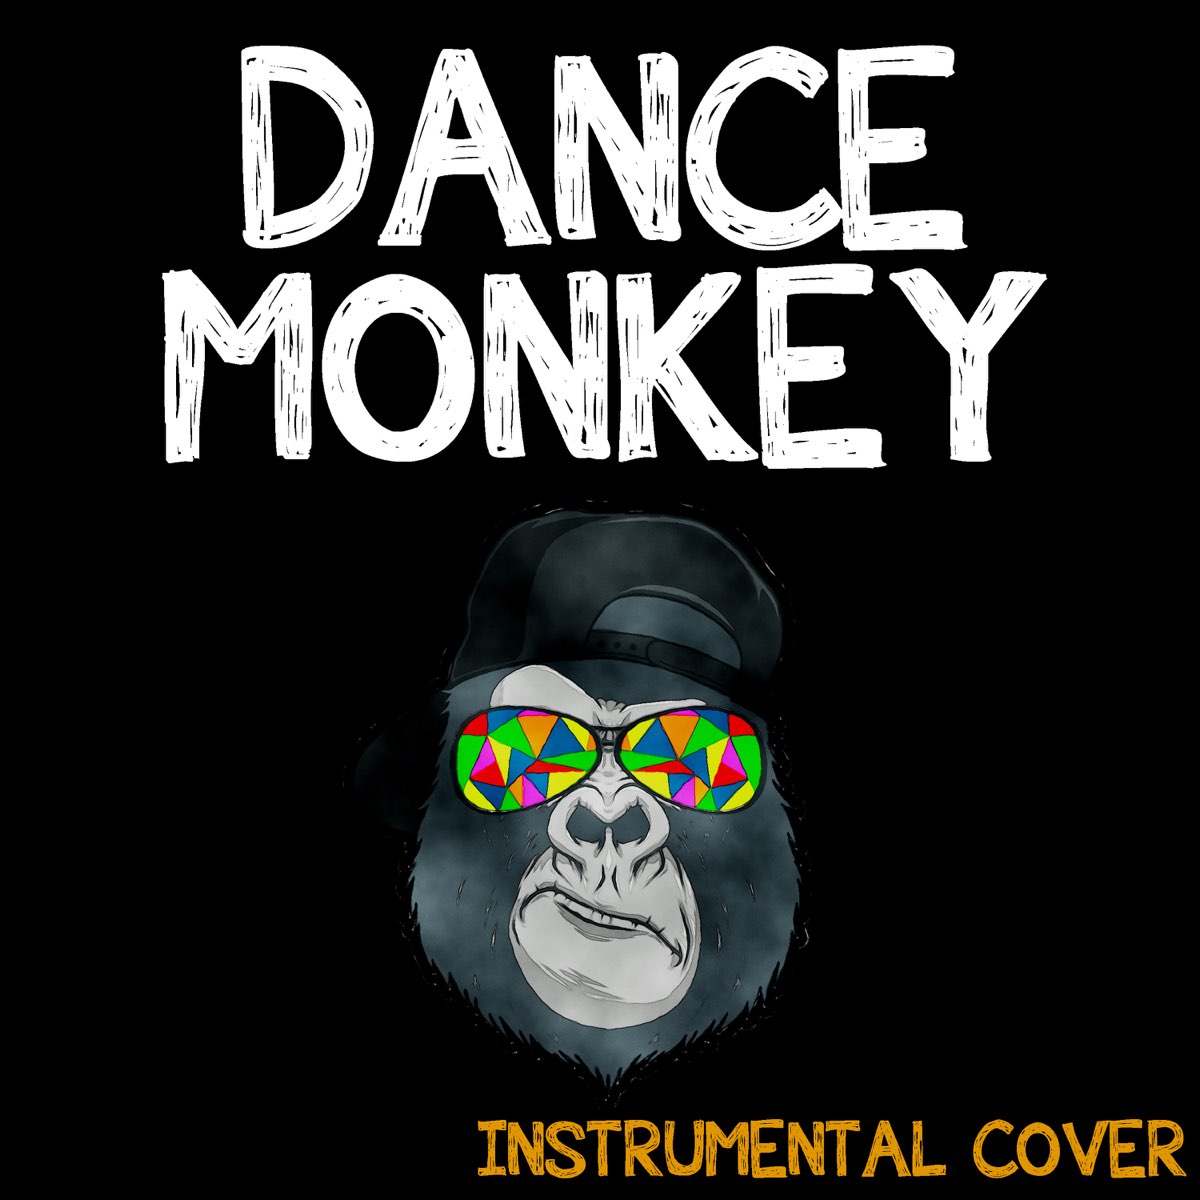 Dance Monkey. Dance Monkey обложка. Дэнс манки. Tones and i Dance Monkey обложка.